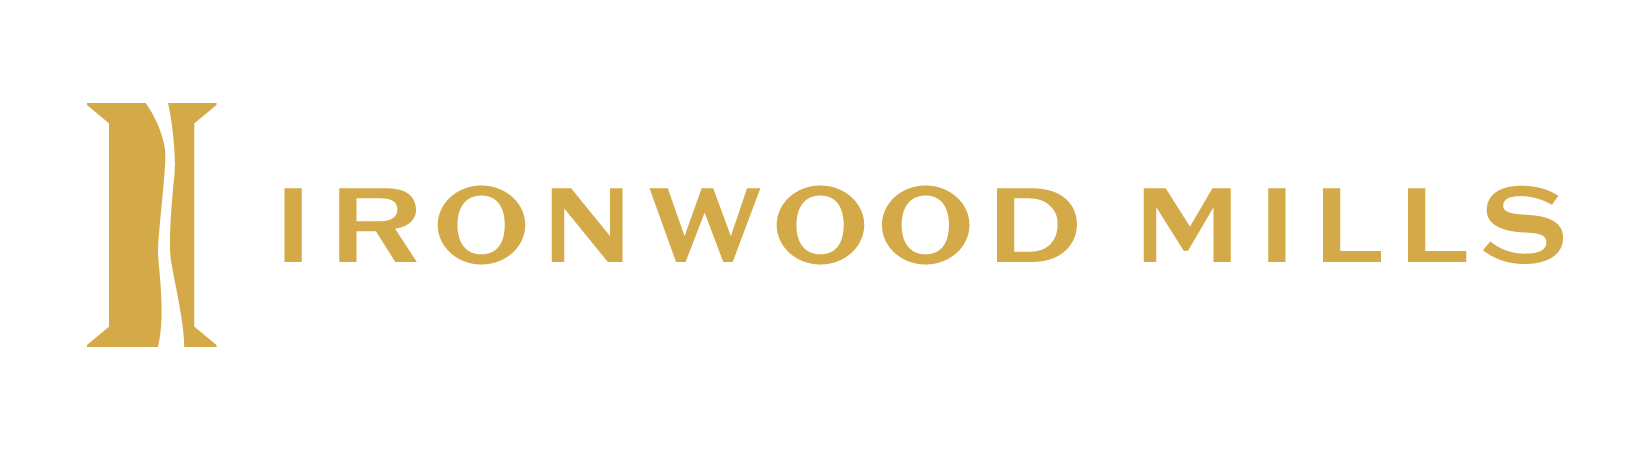 Ironwood Mills Primary Logo - Cypress